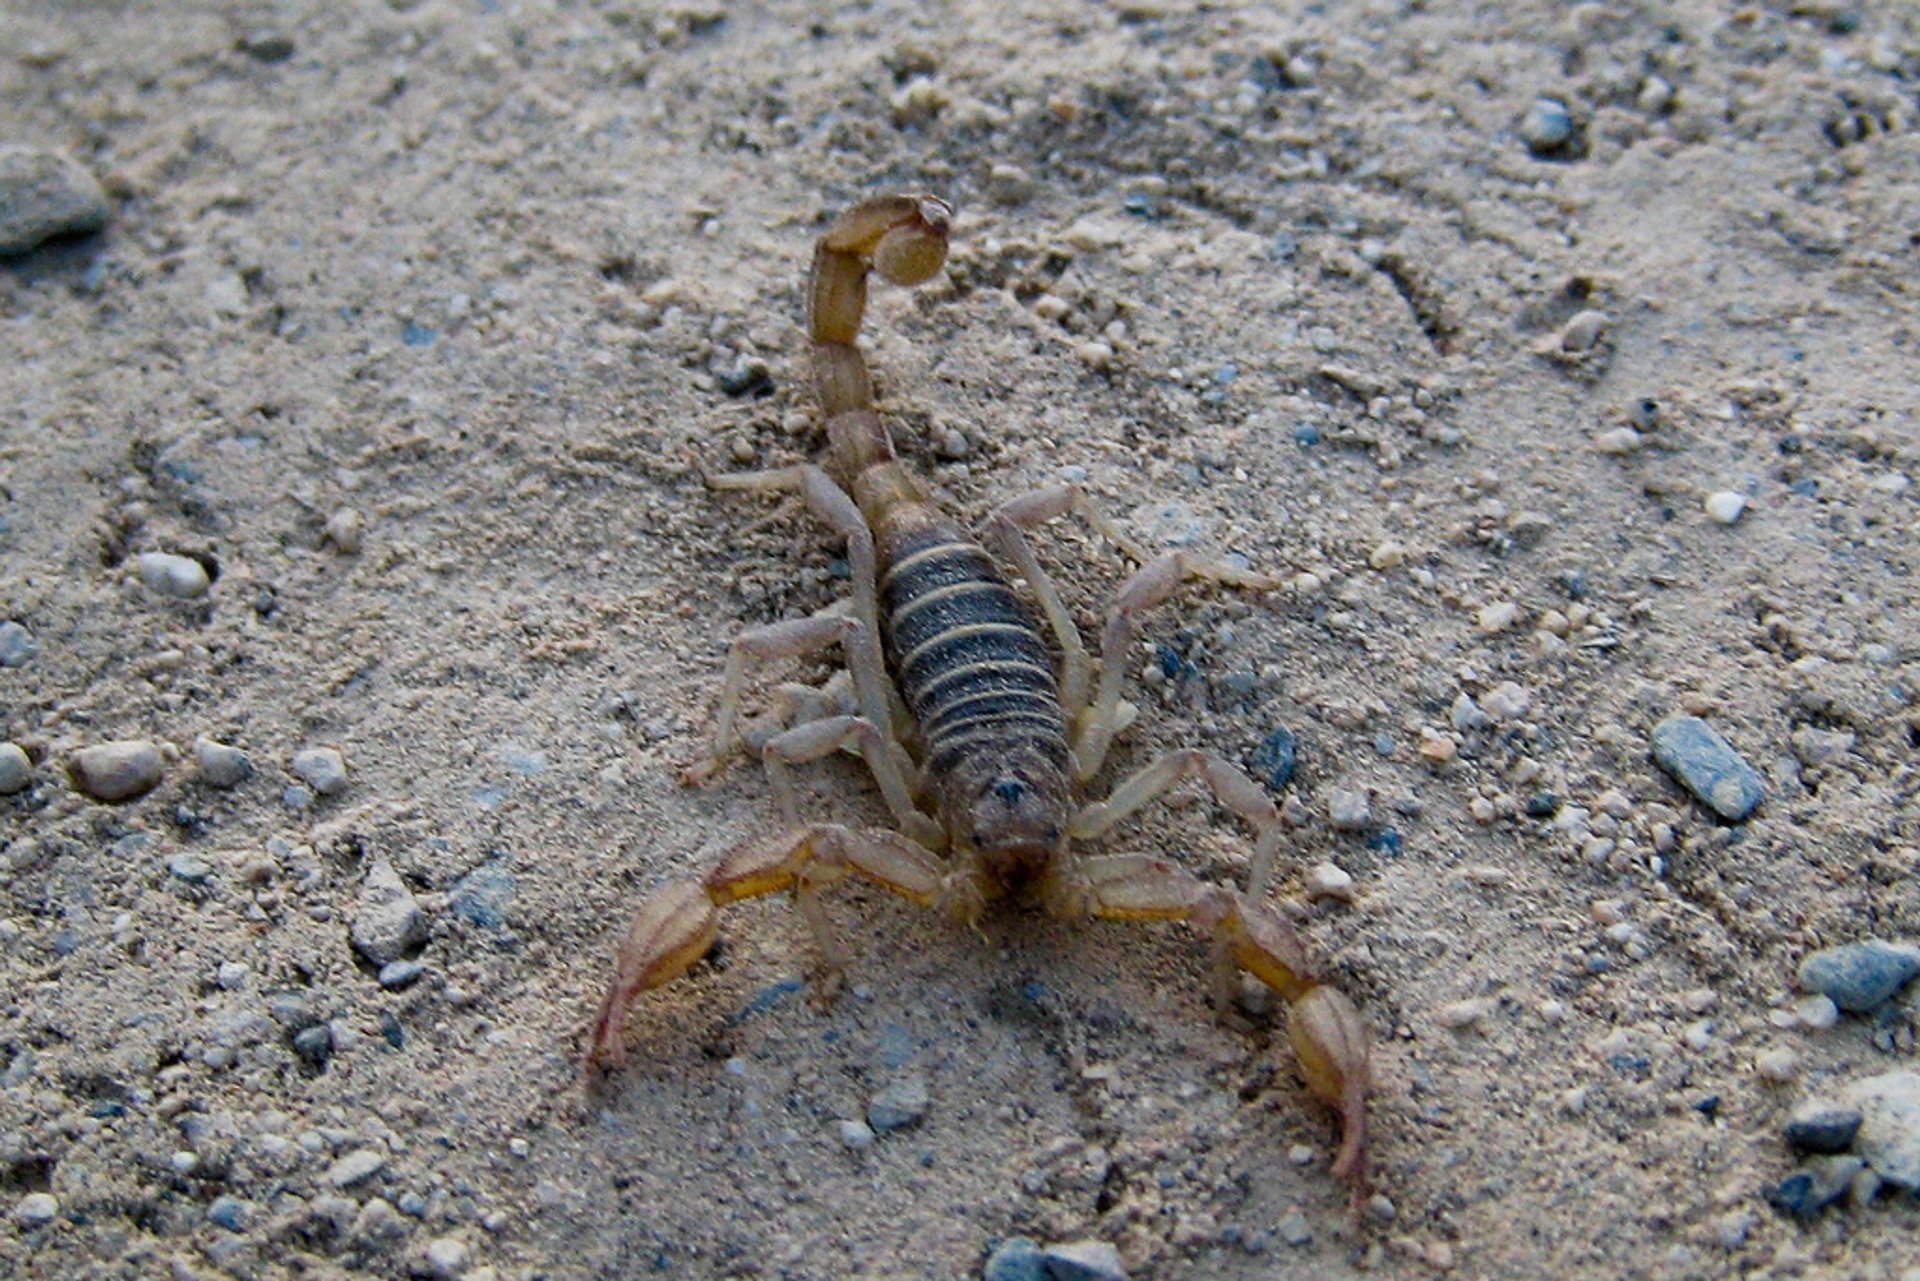 Scorpions in Las Vegas